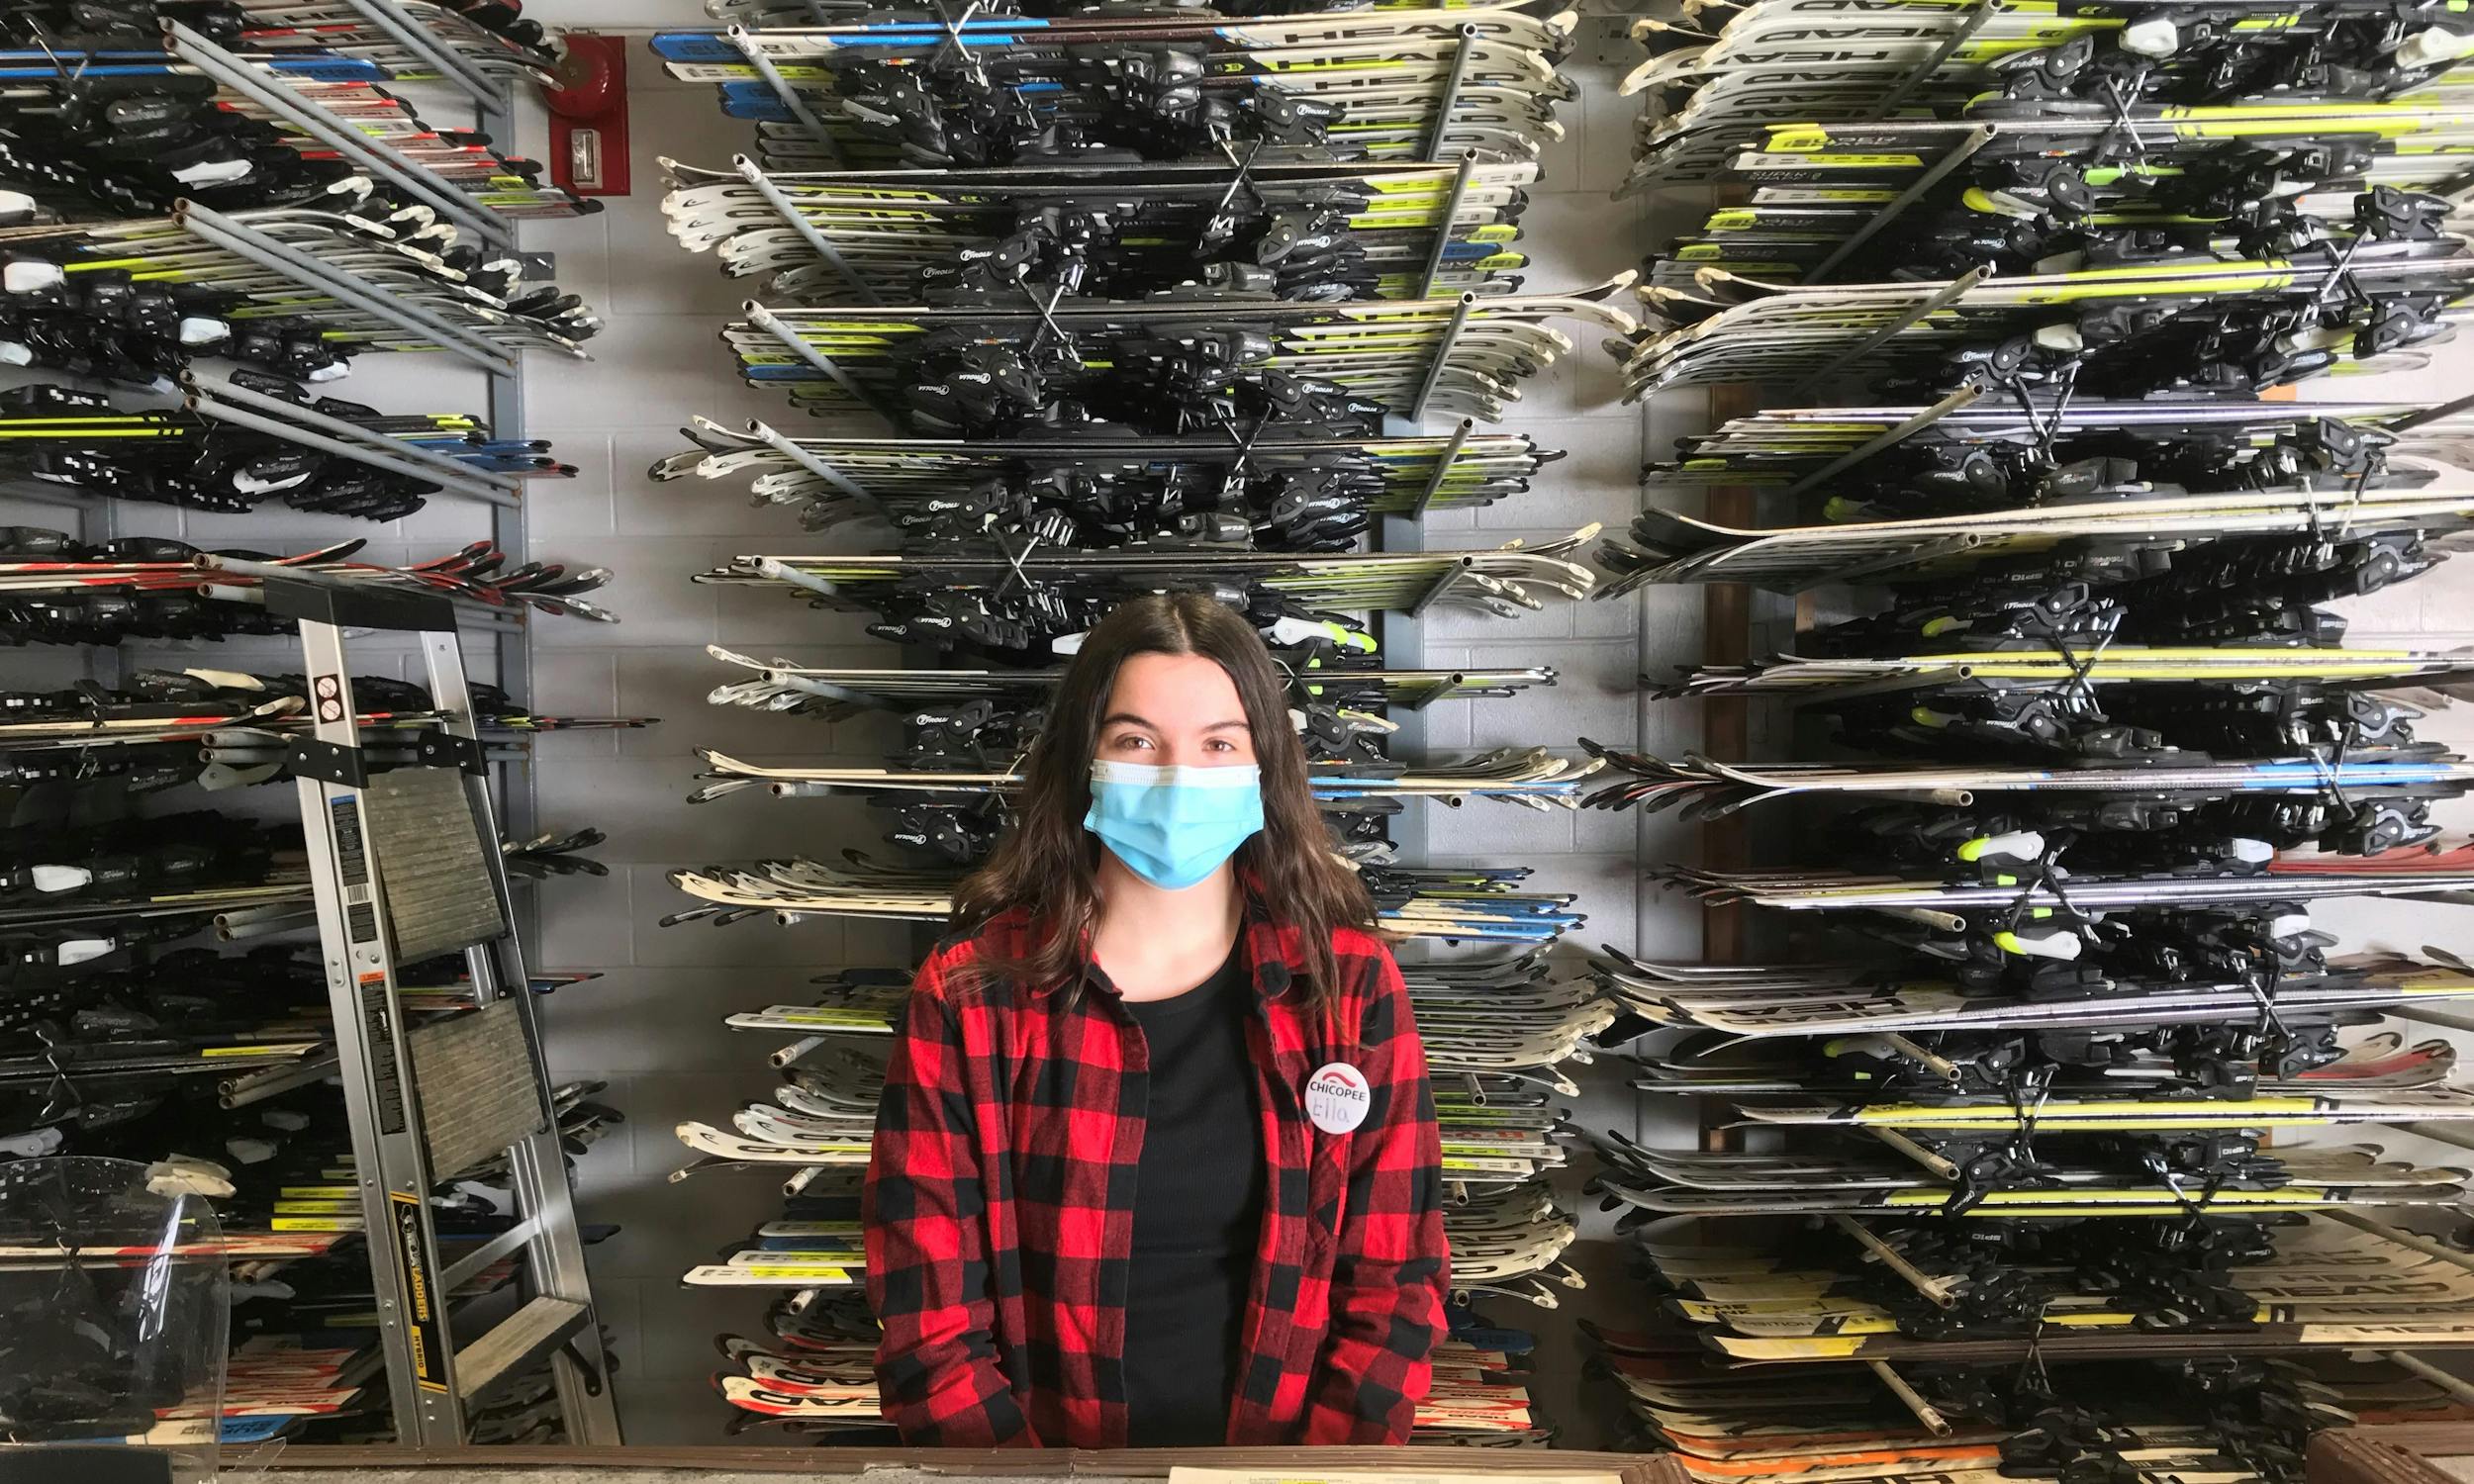 Rental Shop Attendant Ella standing in front of racks of rental skis, her smile hidden by her mask. 